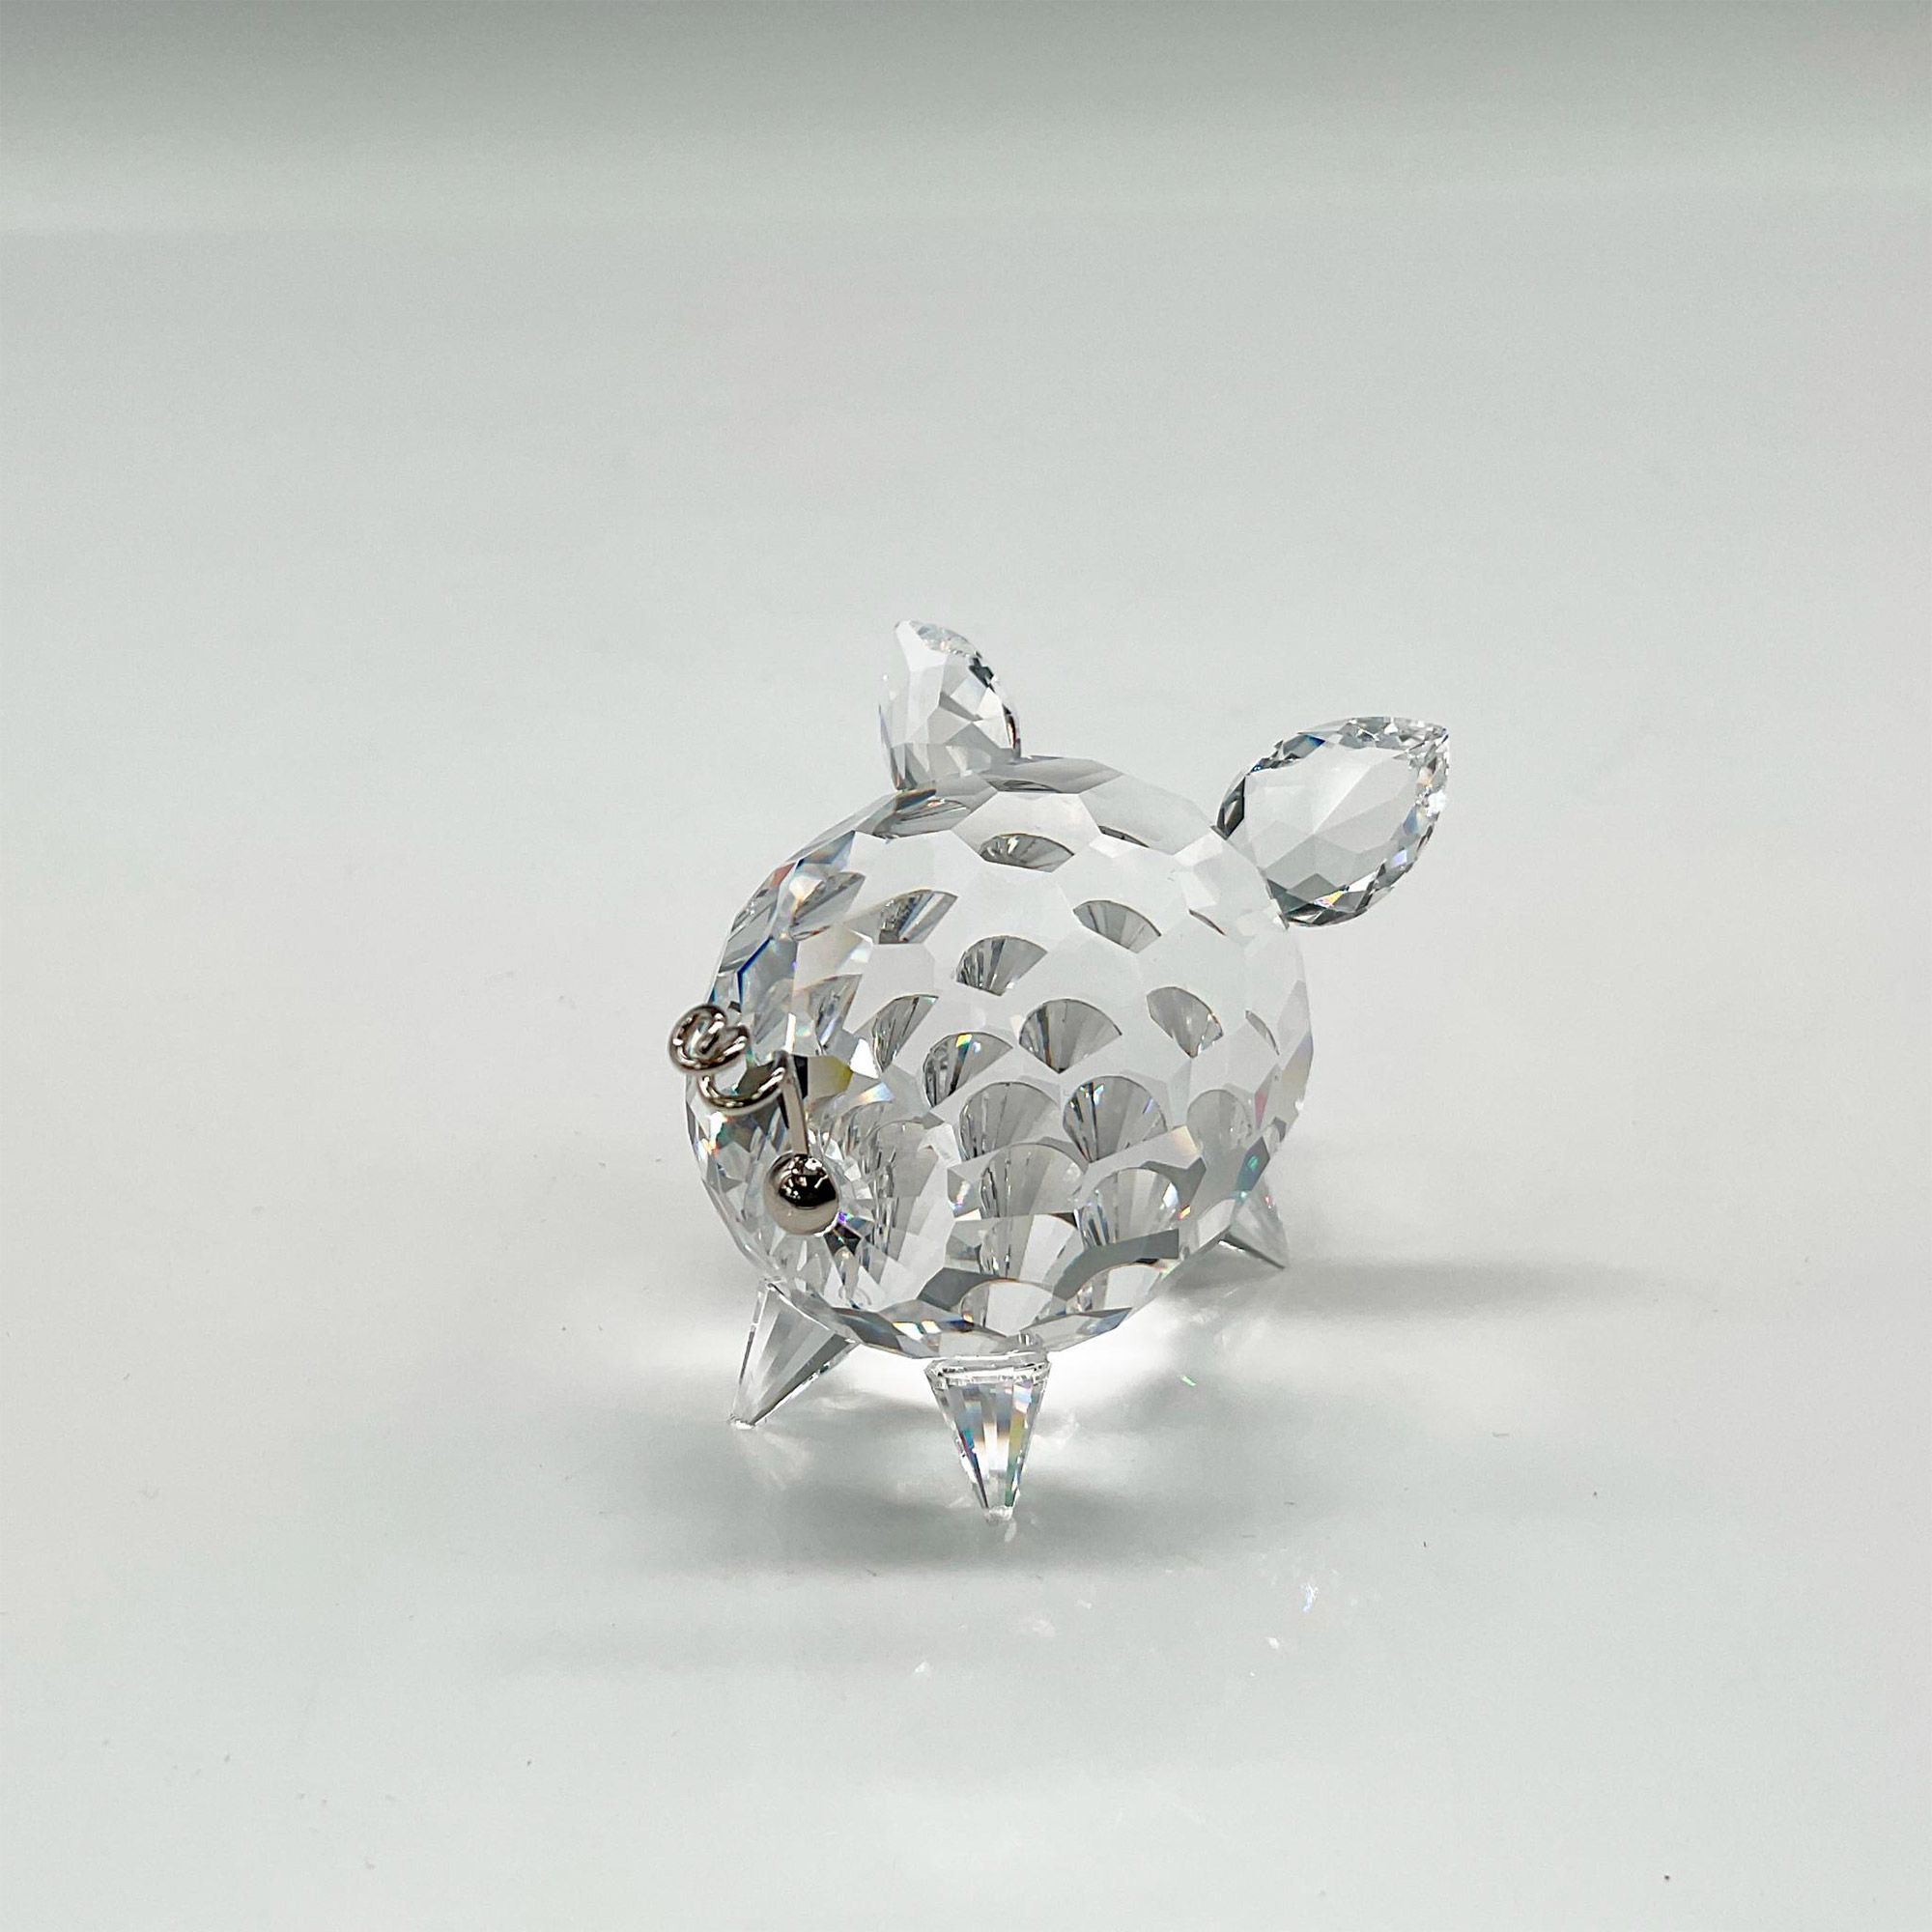 Swarovski Silver Crystal Figurine, Medium Pig - Image 2 of 4